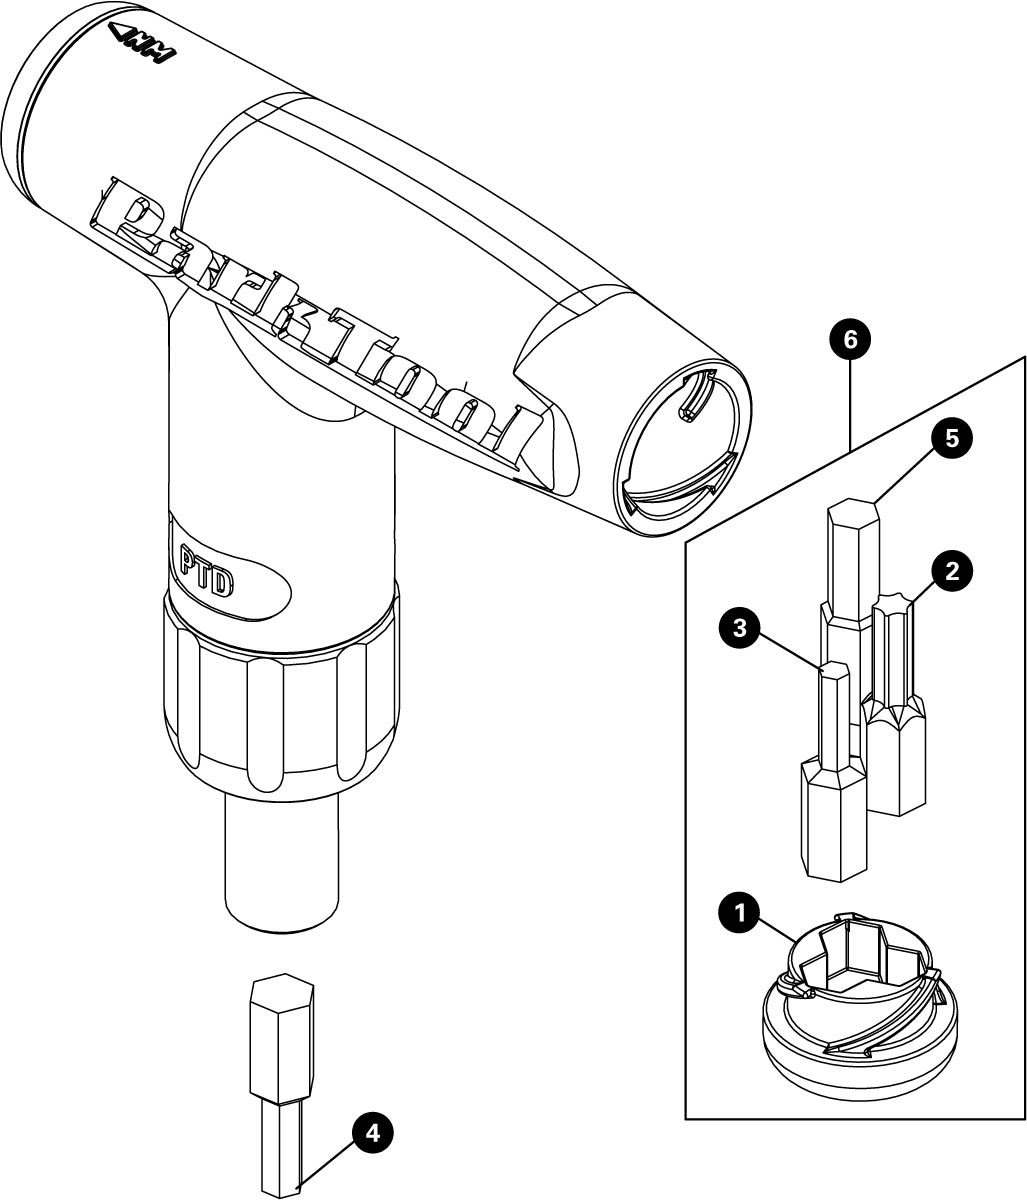 Parts diagram for PTD-5 Preset Torque Driver, enlarged